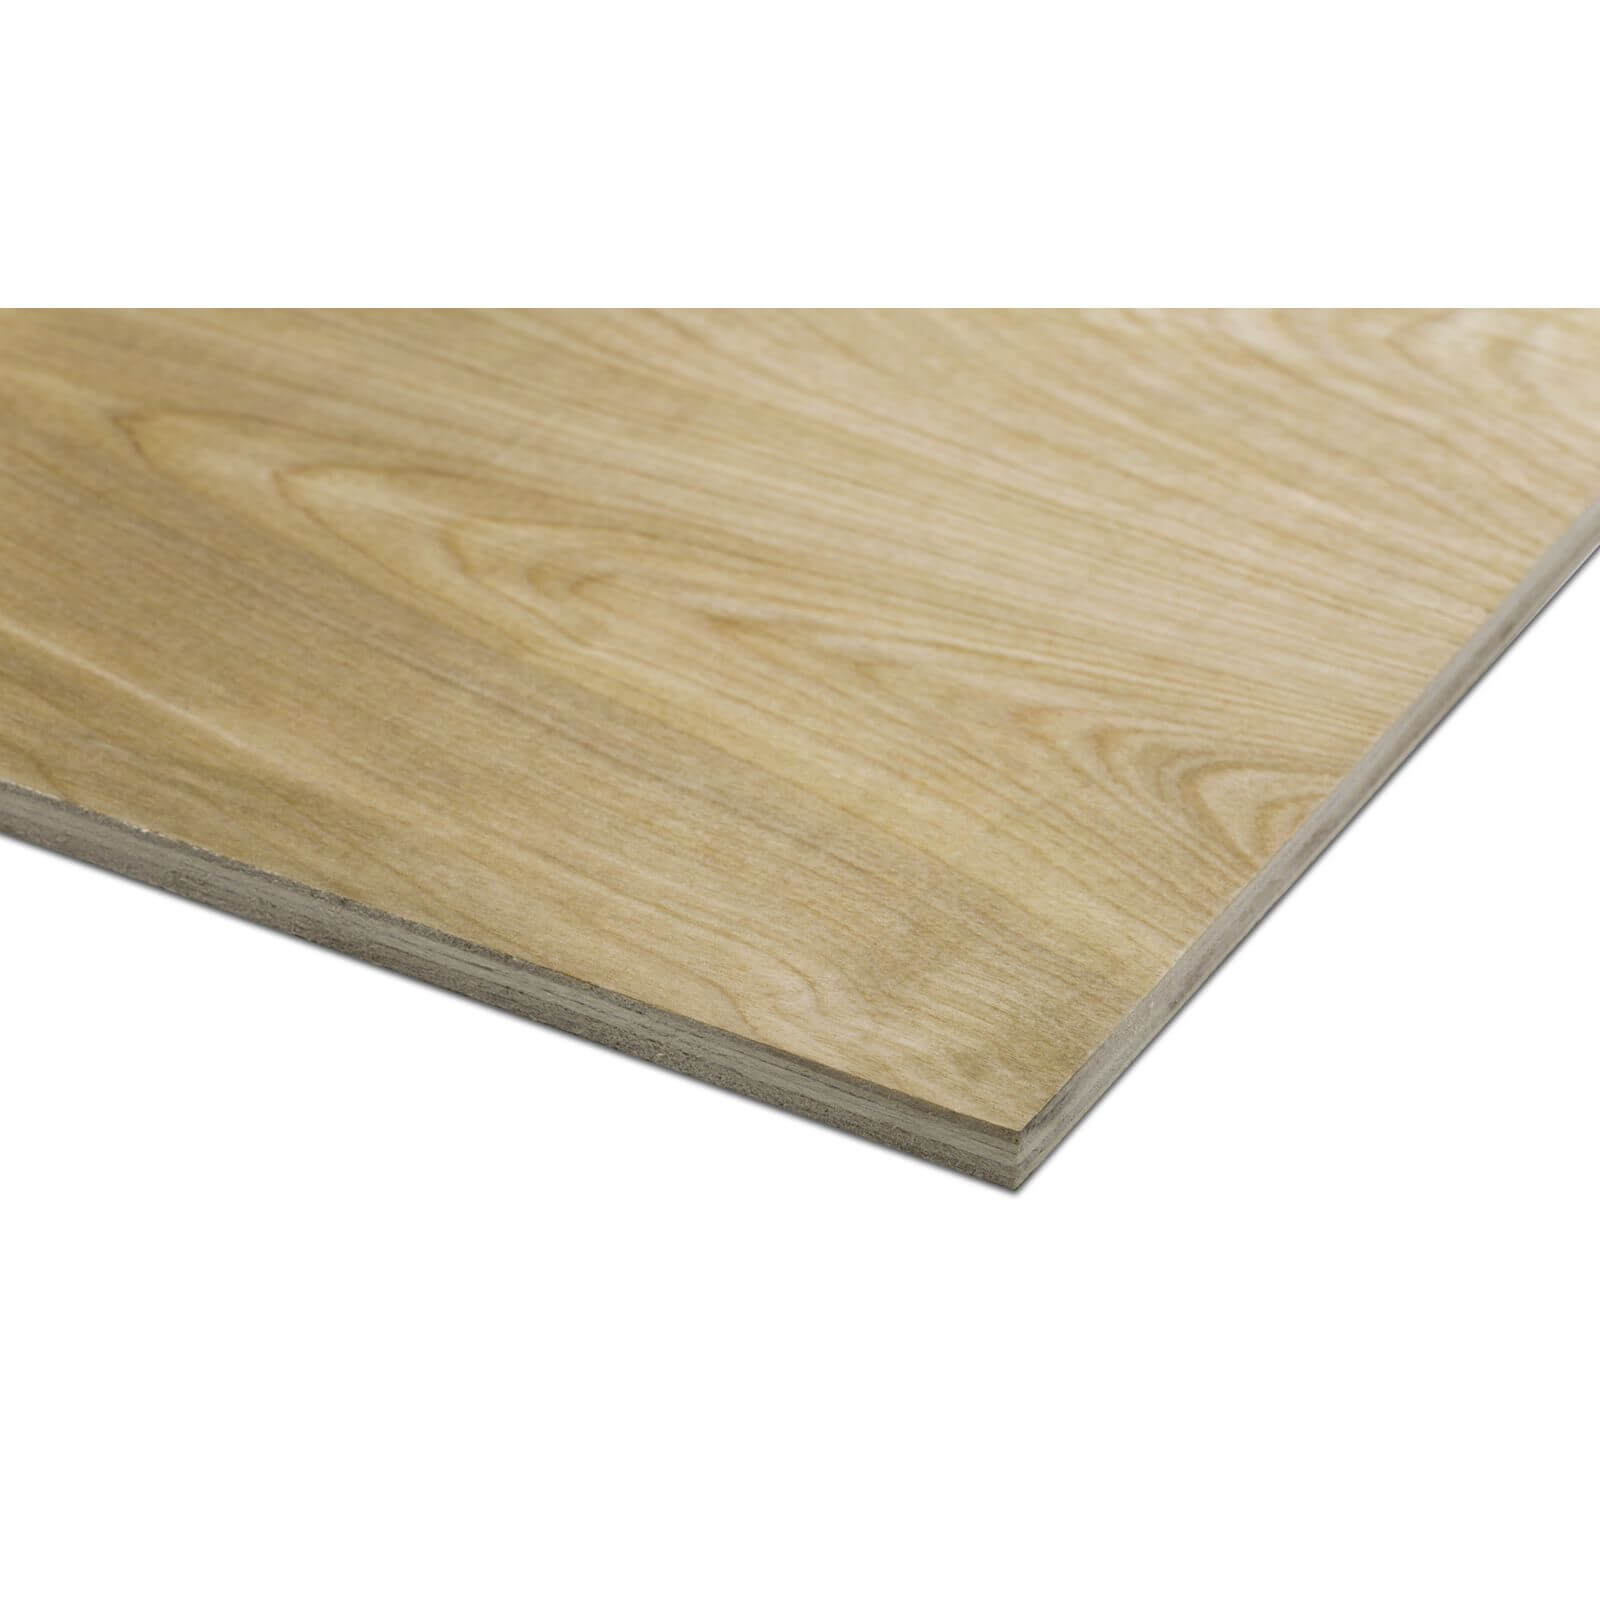 Metsa Hardwood Plywood Board 1.2m (1220 x 2440 x 9mm)